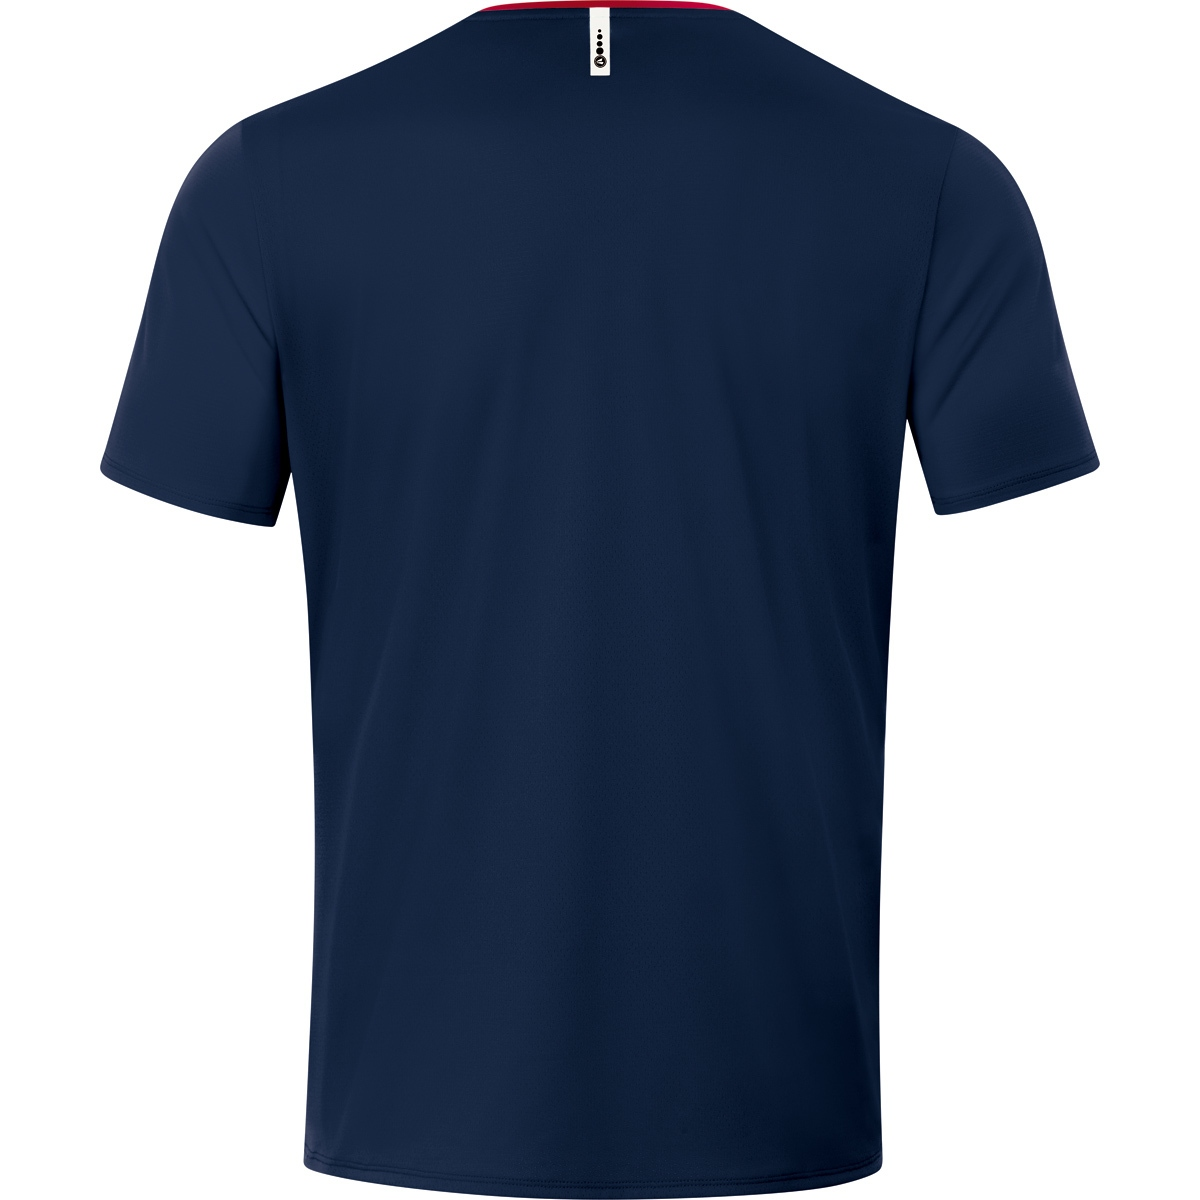 marine/chili Gr. Champ 128, 2.0 rot, Kinder, T-Shirt JAKO 6120